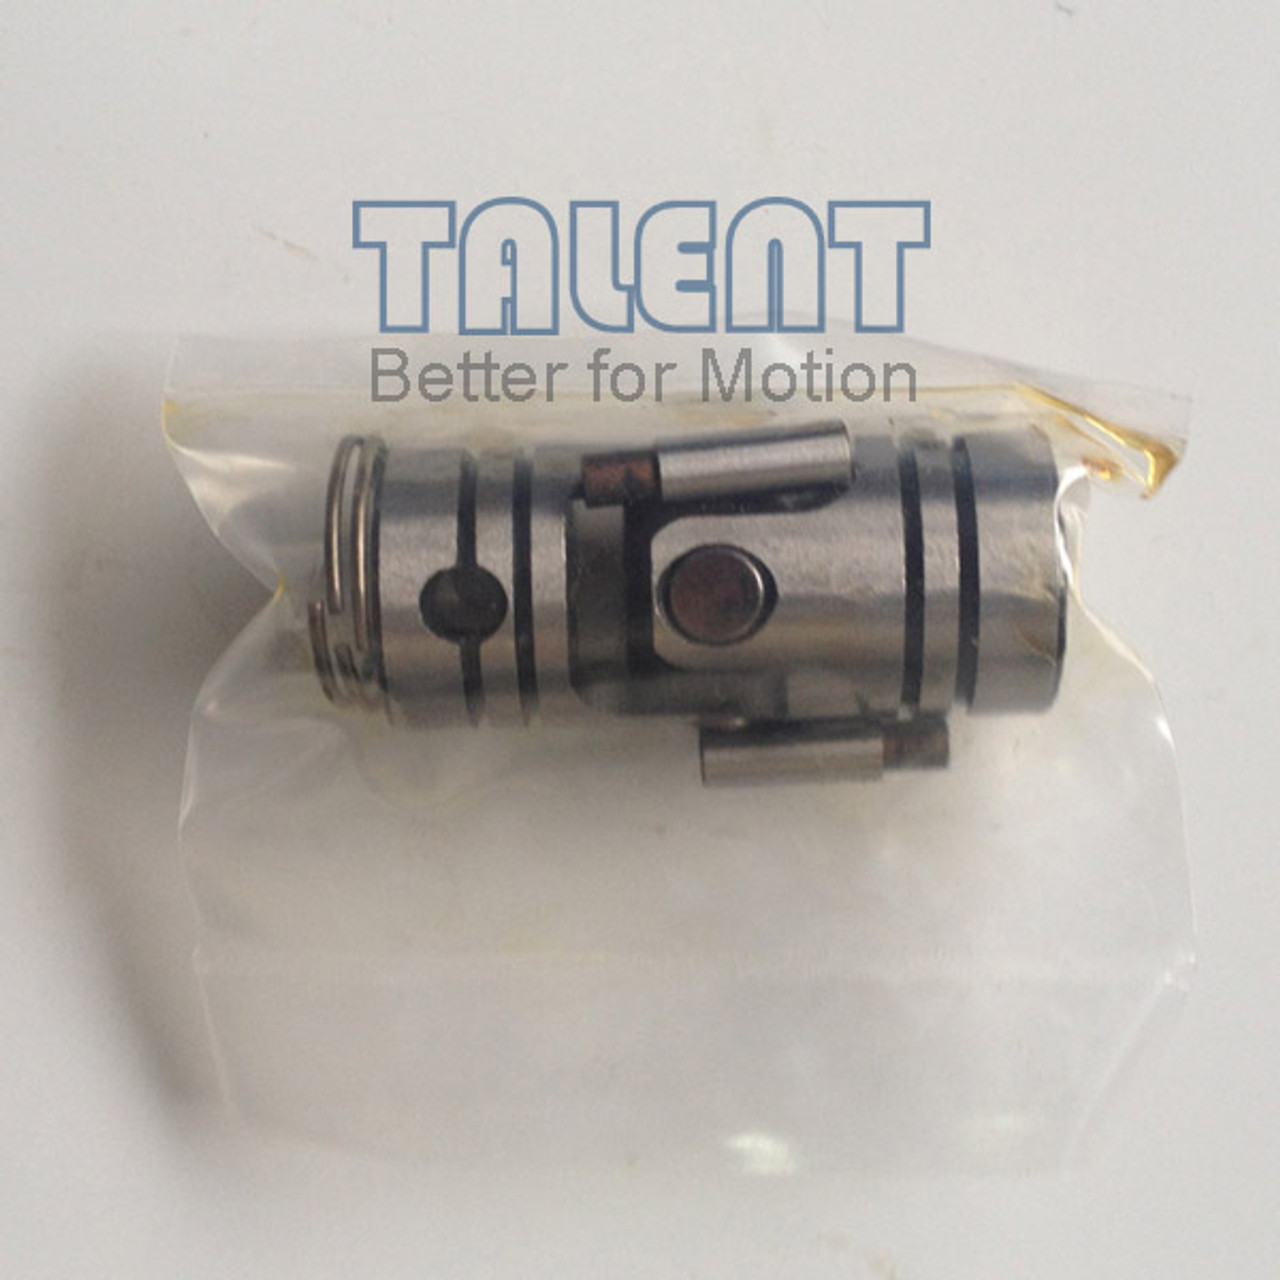 02WS mini universal bore attachment set - Motion joint, 4x4, Talent pin shaft